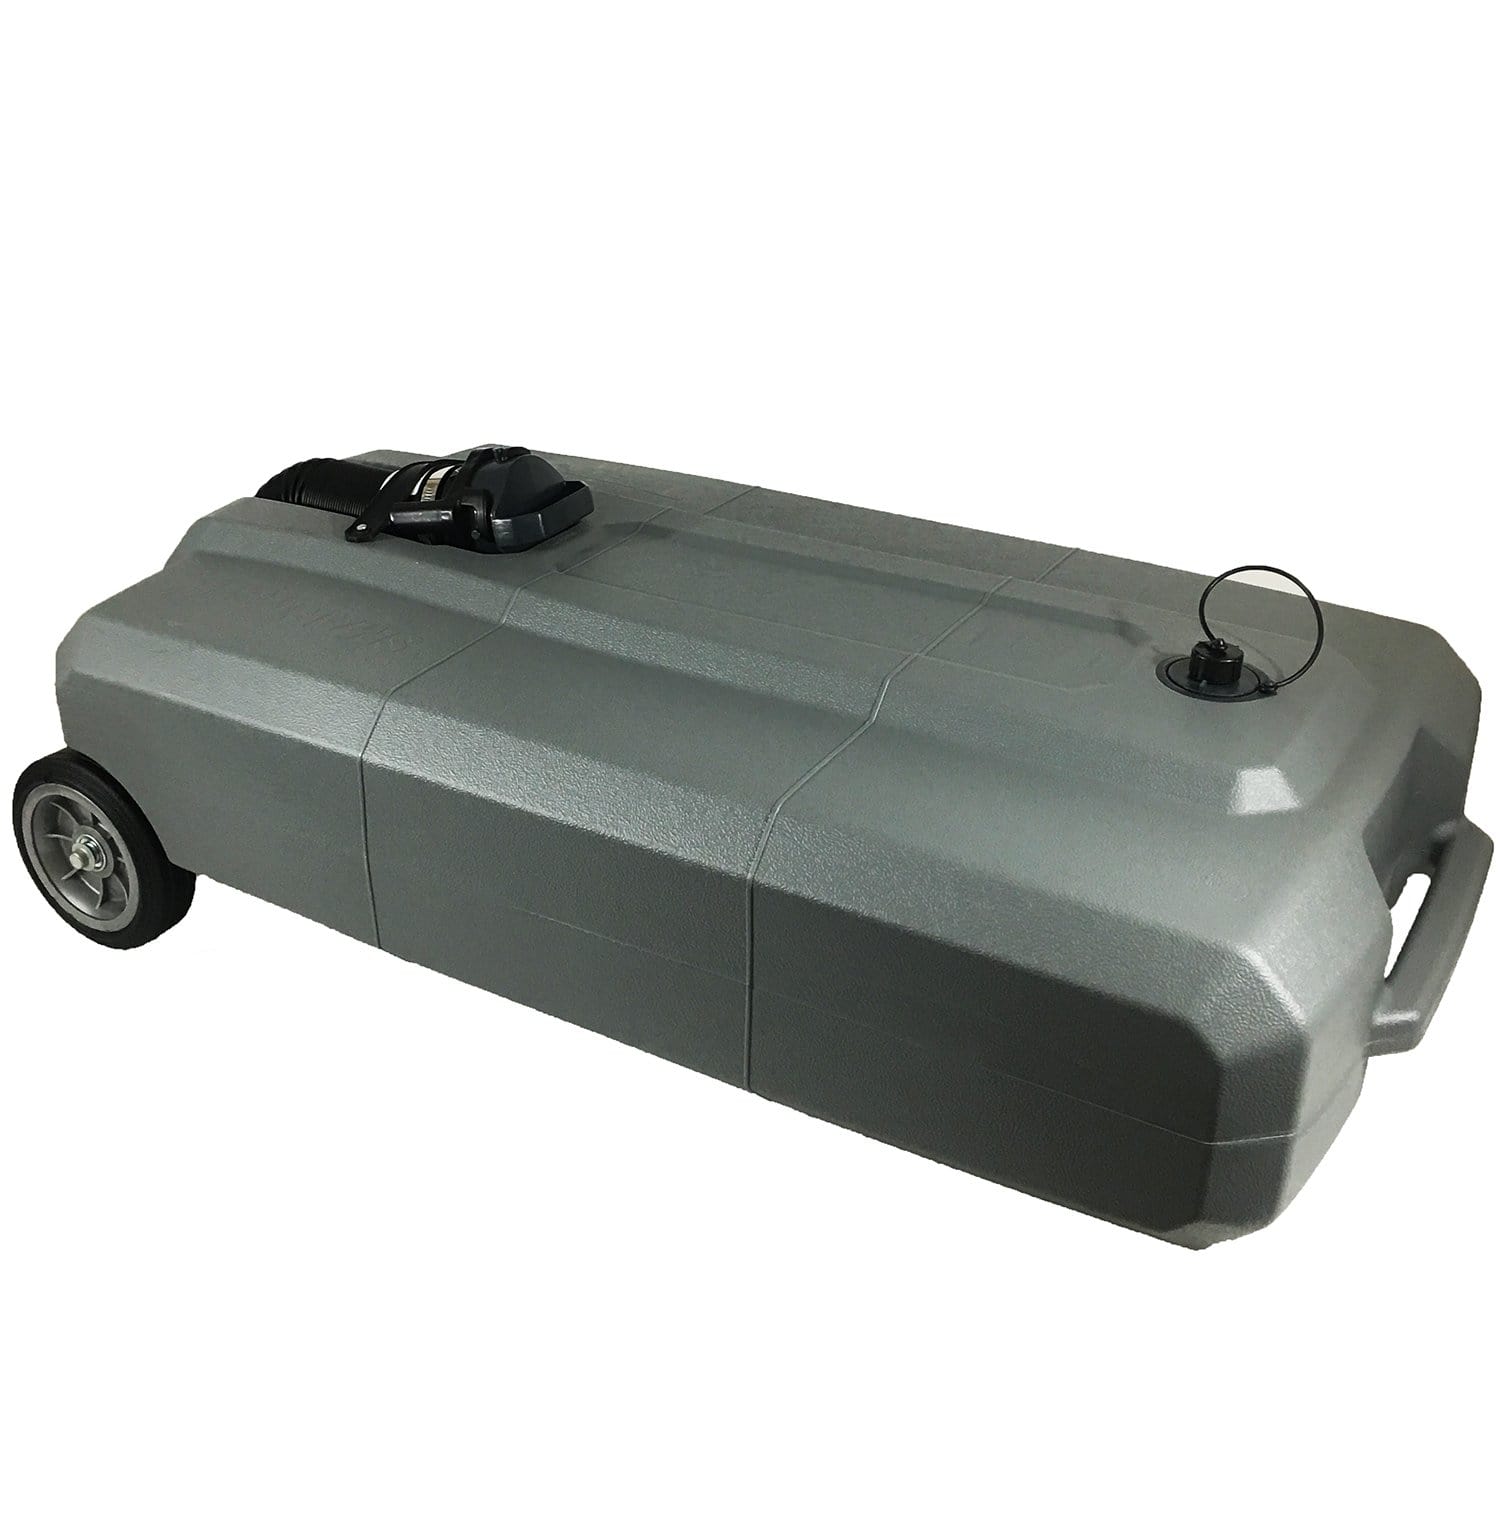 20 Gallon Insulated Portable Bait Tank